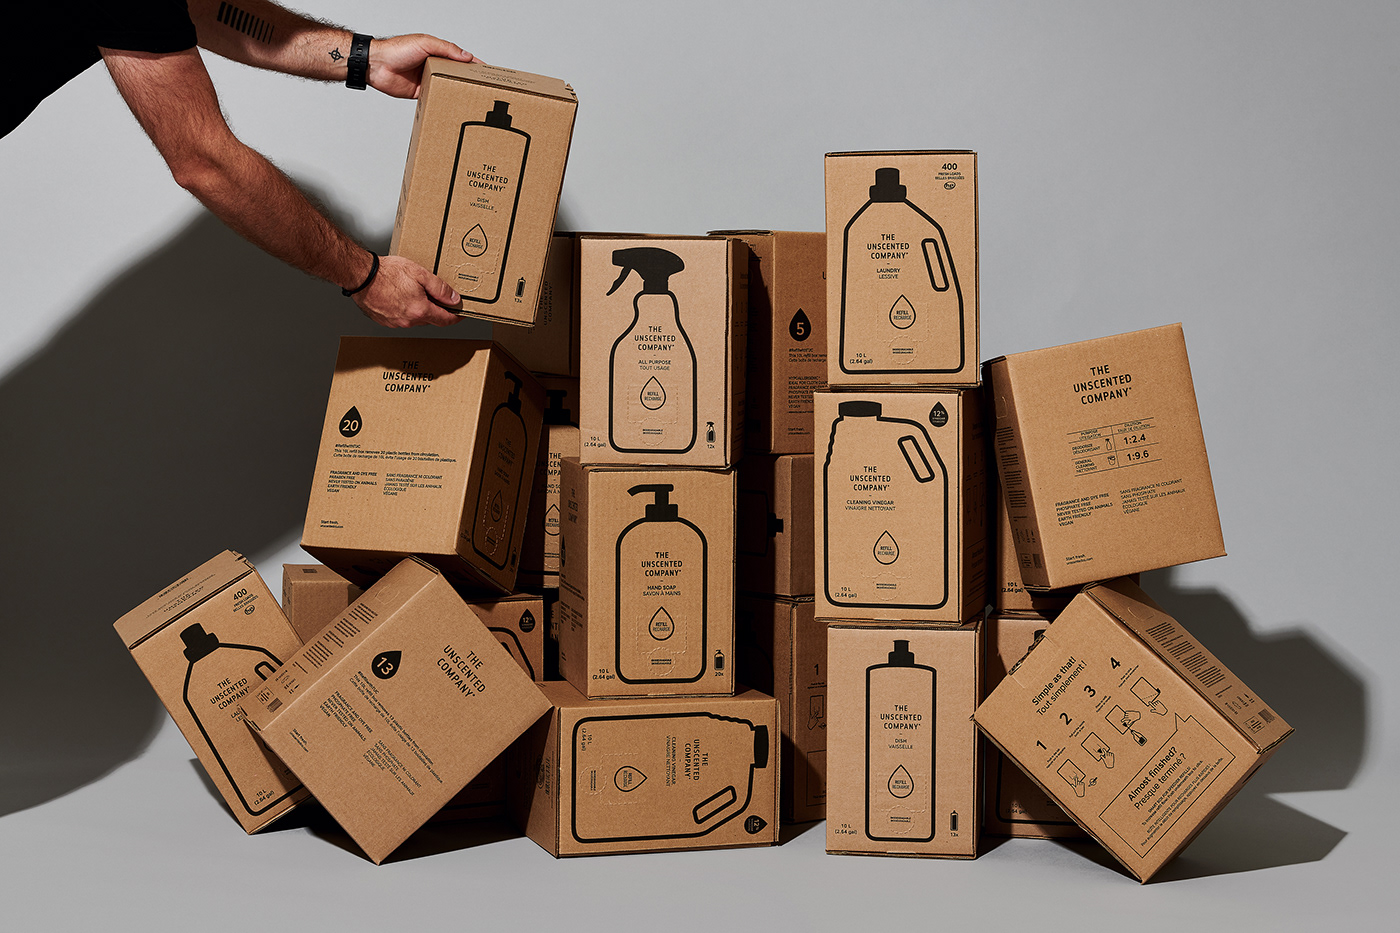 boxes cardboard box Kraft Box Packaging print refill refill box screen printing shipping box the unscented company